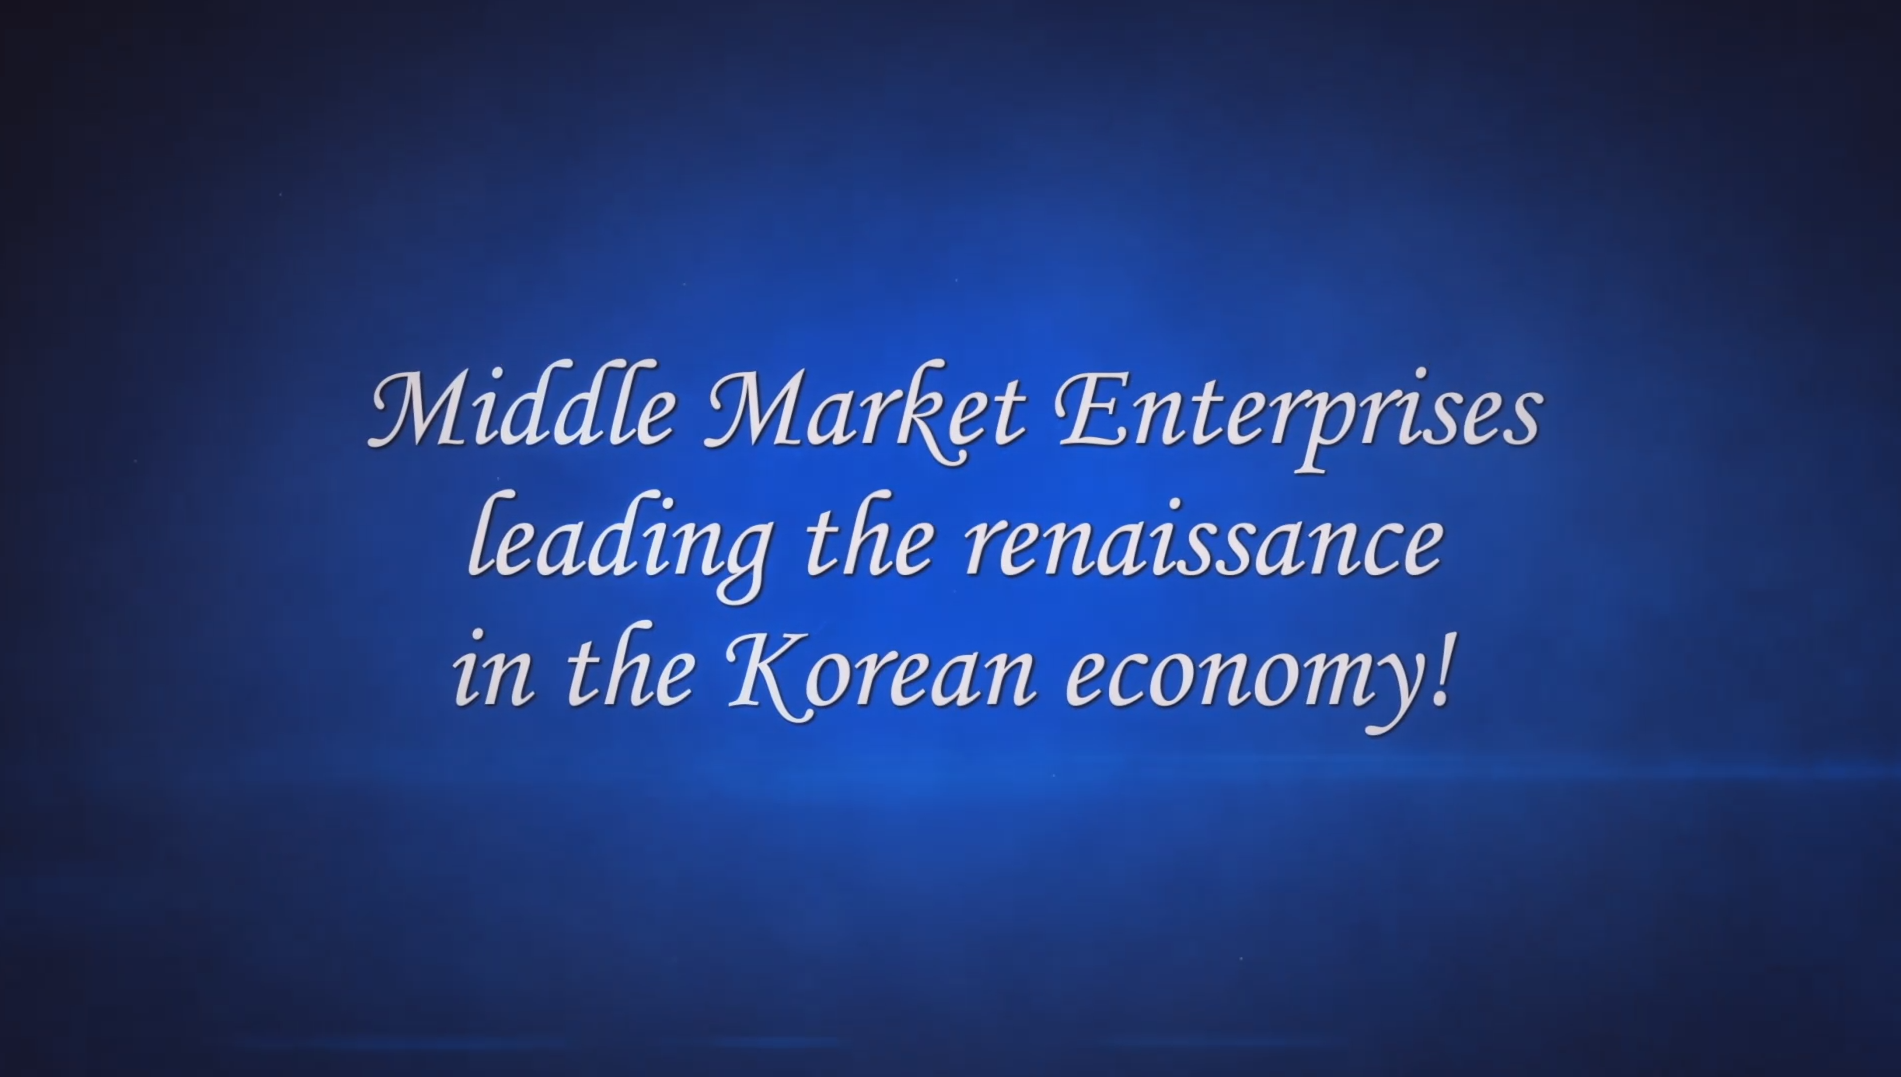 Middle Market Enterprises leading the renaissance in the Korean economy